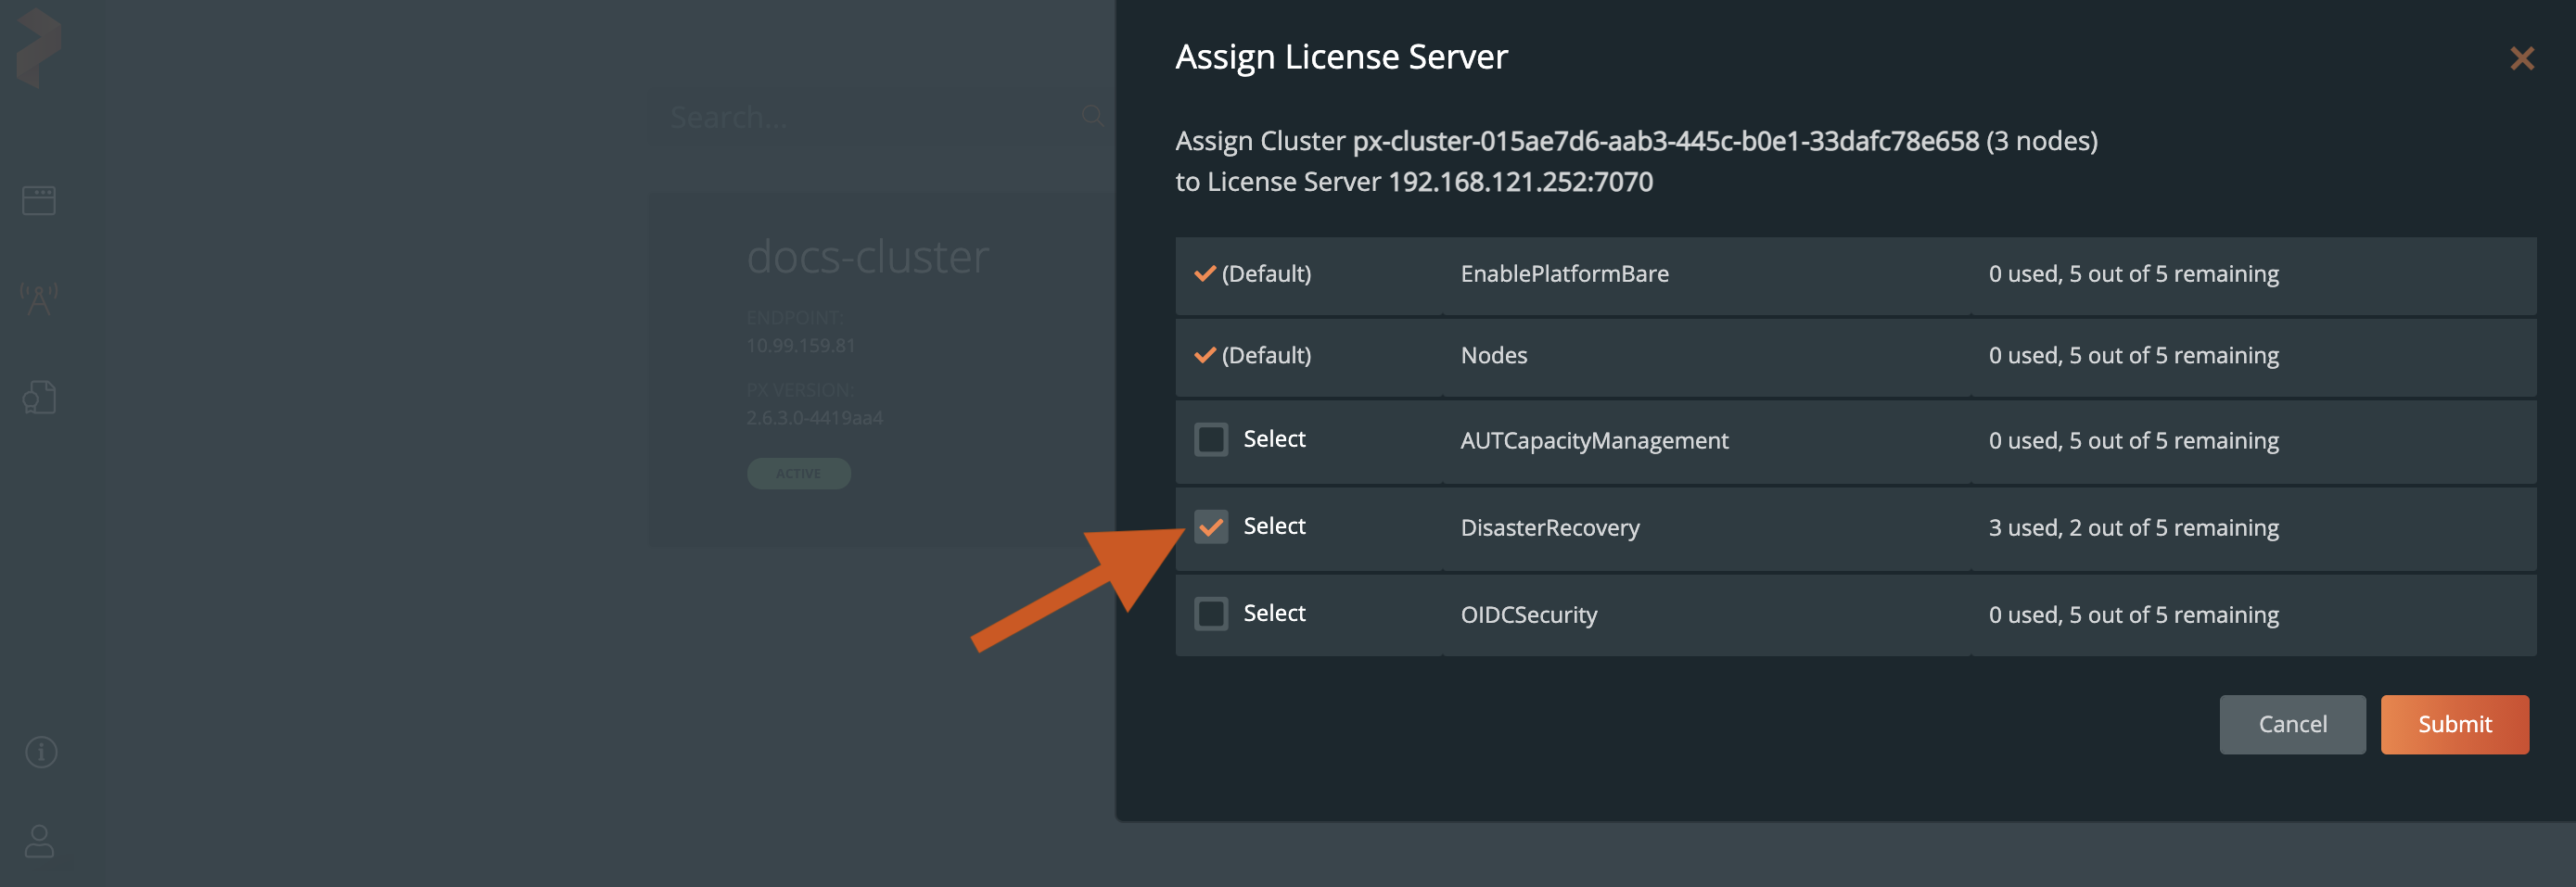 Assign license server window